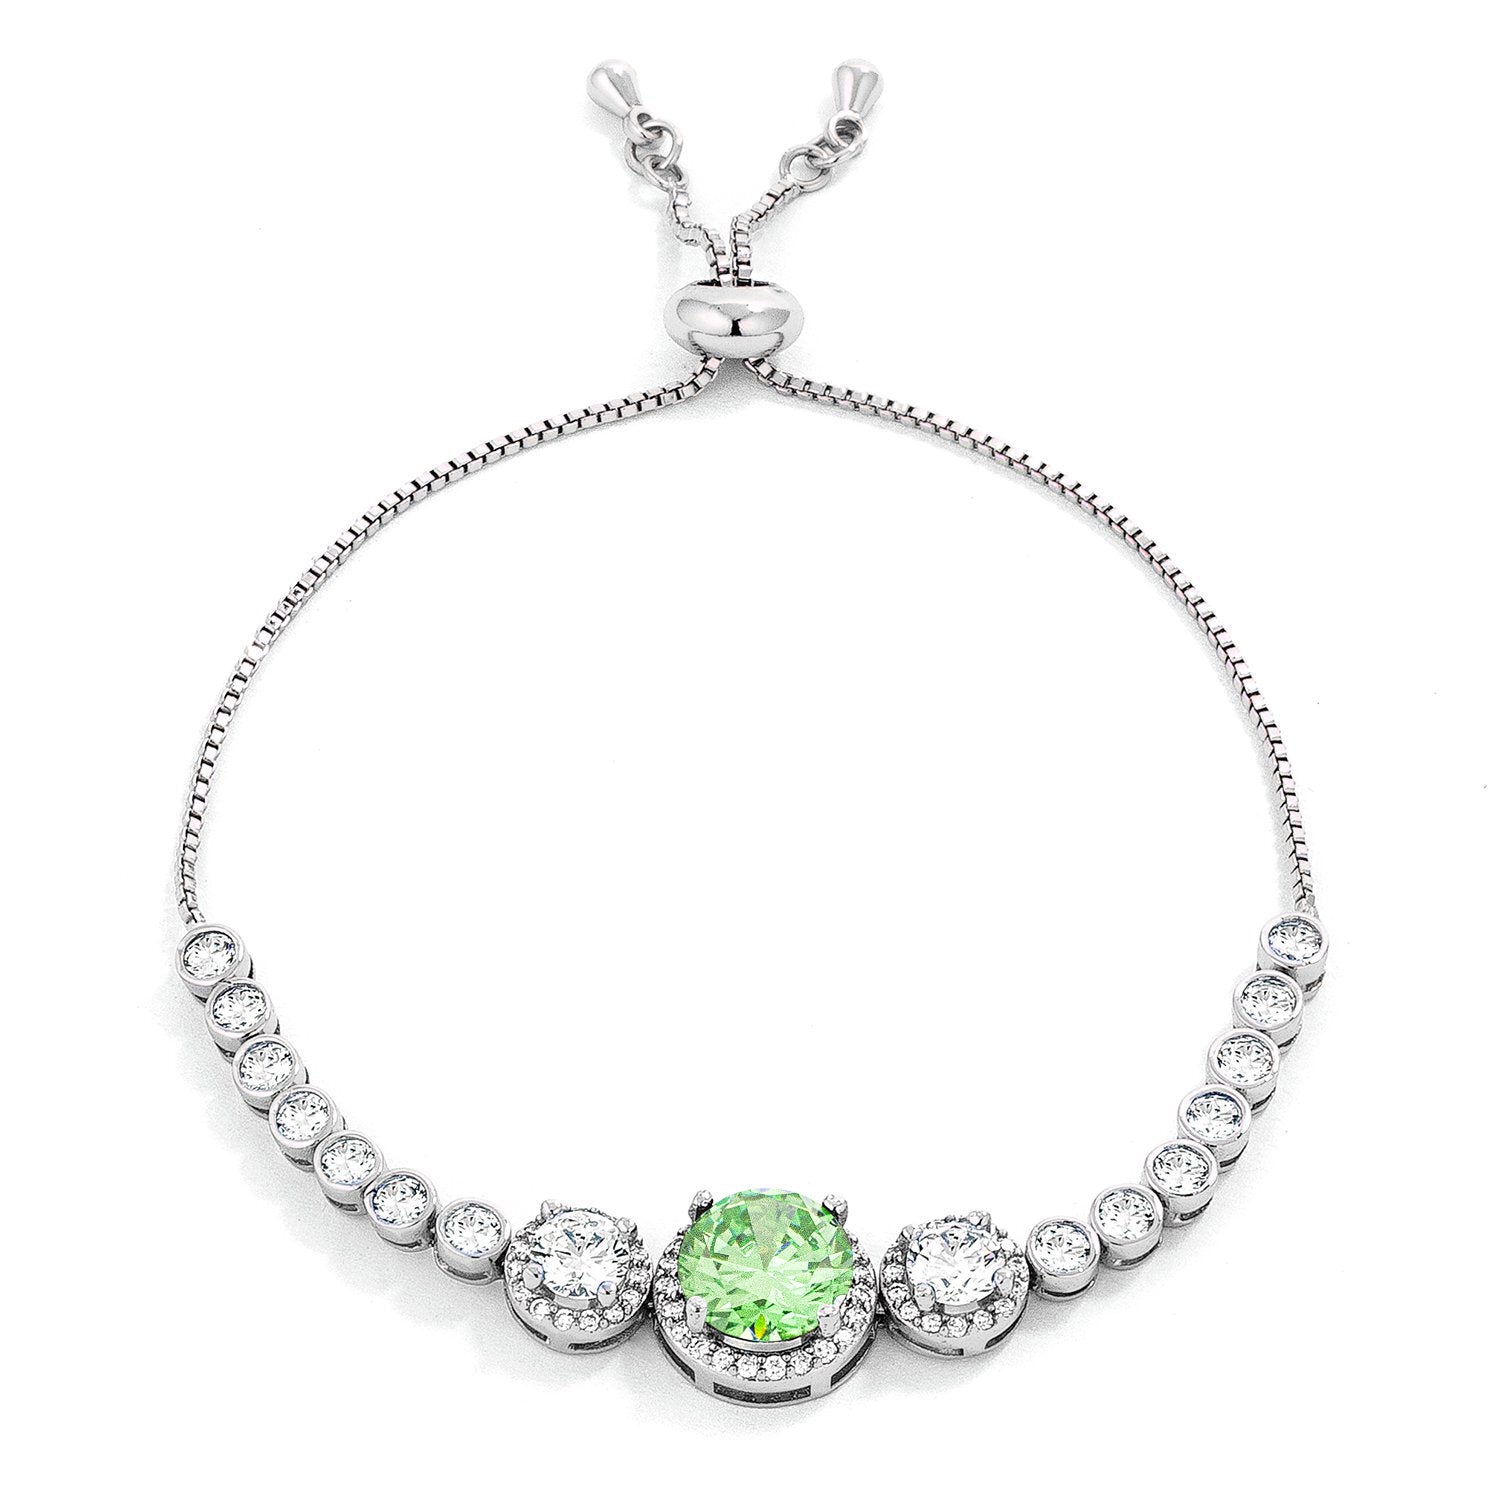 Adjustable Light Green & Clear CZ Bolo Style Tennis Bracelet